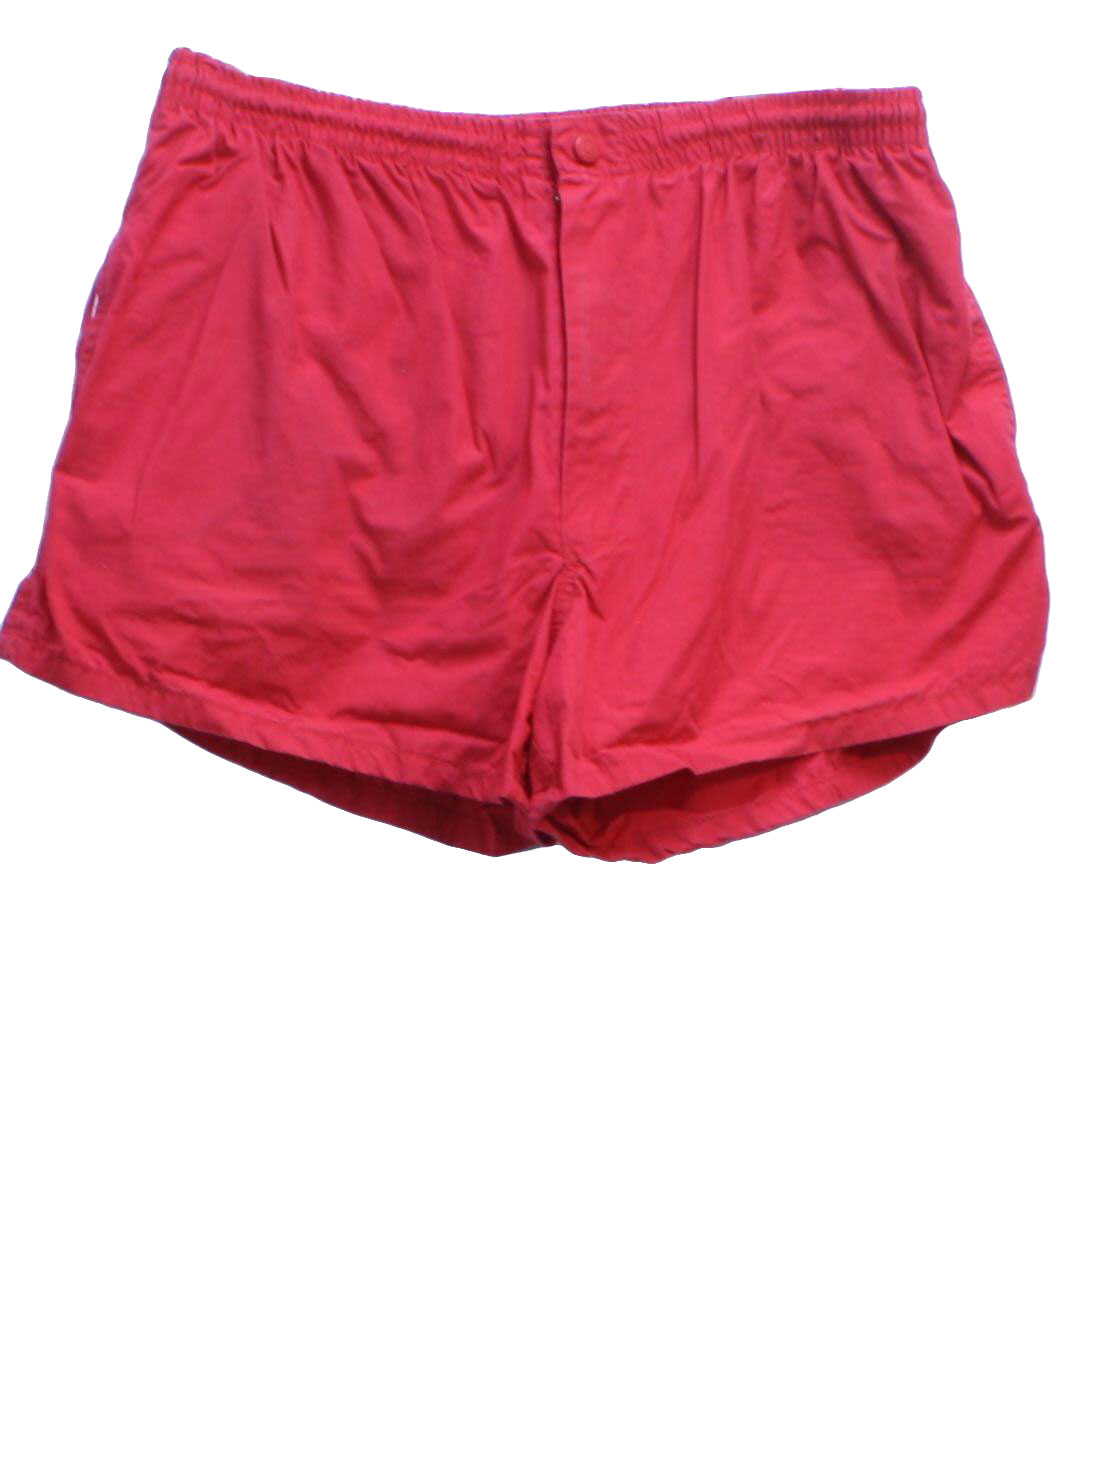 Retro 90's Swimsuit/Swimwear: 90s -Eddie Bauer- Mens red background ...